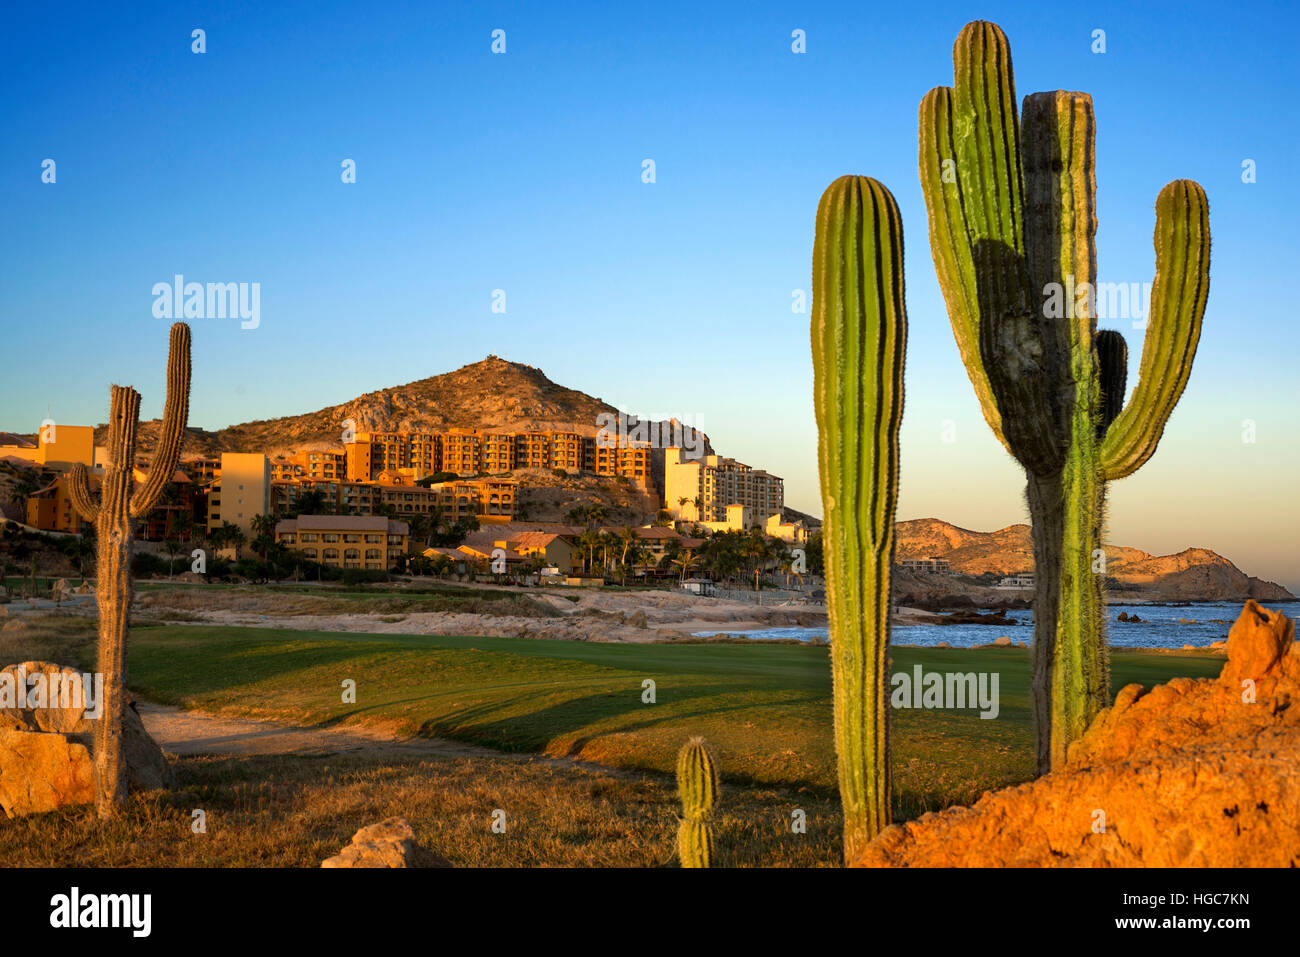 Landscape with cactus in front of Cabo del Sol Resort & Golf, Cabo San Lucas, Los Cabos, Sea of Cortez, Baja California, Mexico. Stock Photo